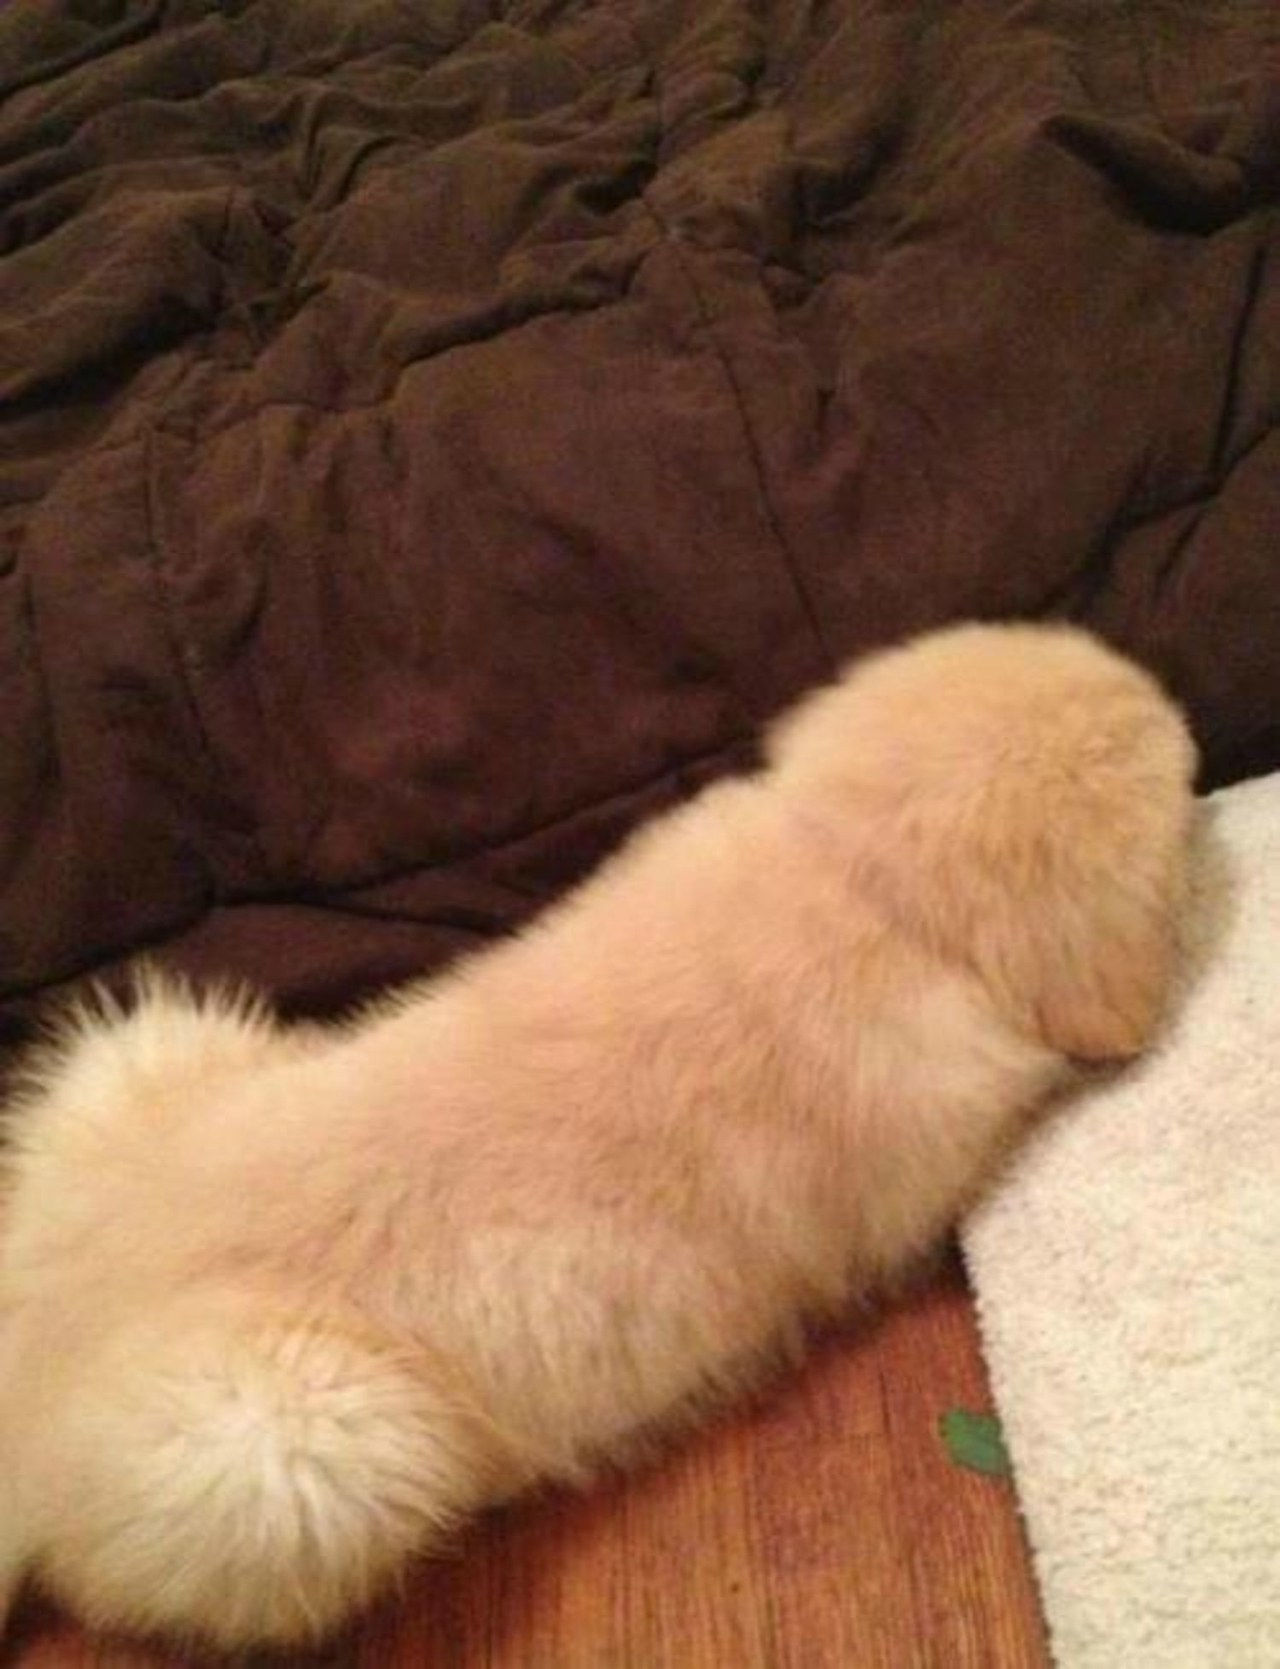 accidental penis dog